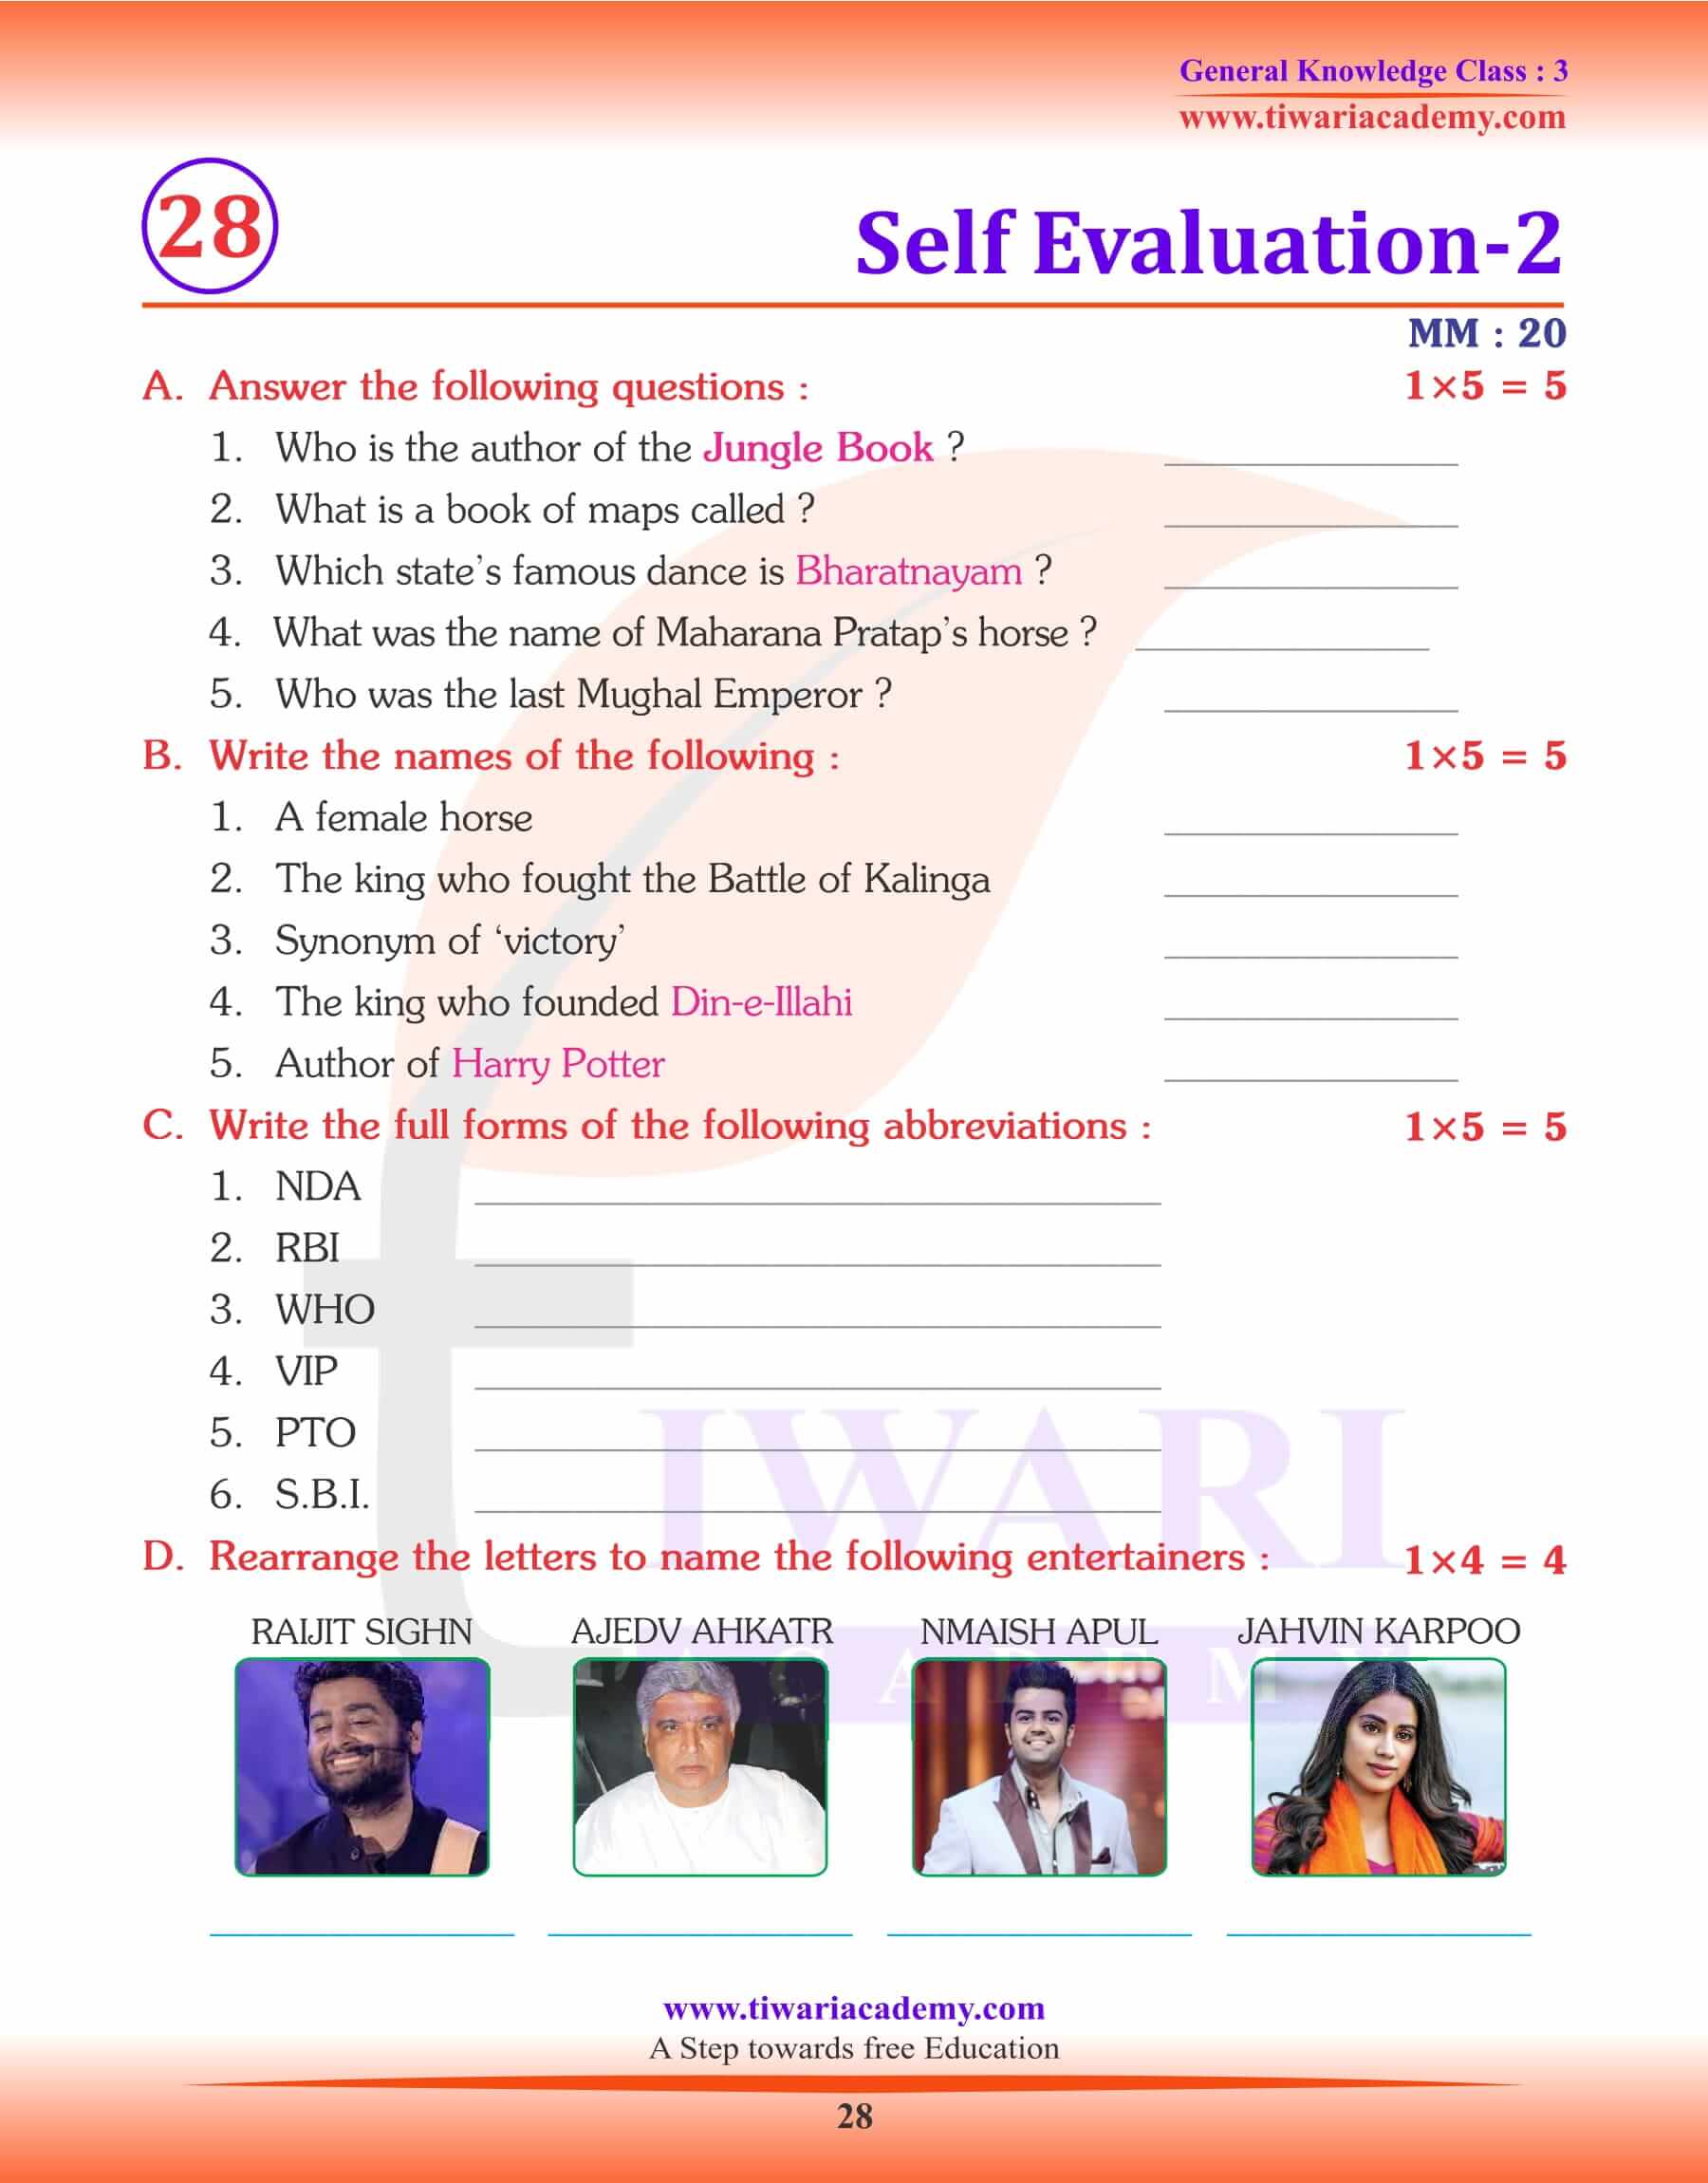 Self Evaluation GK Test 2